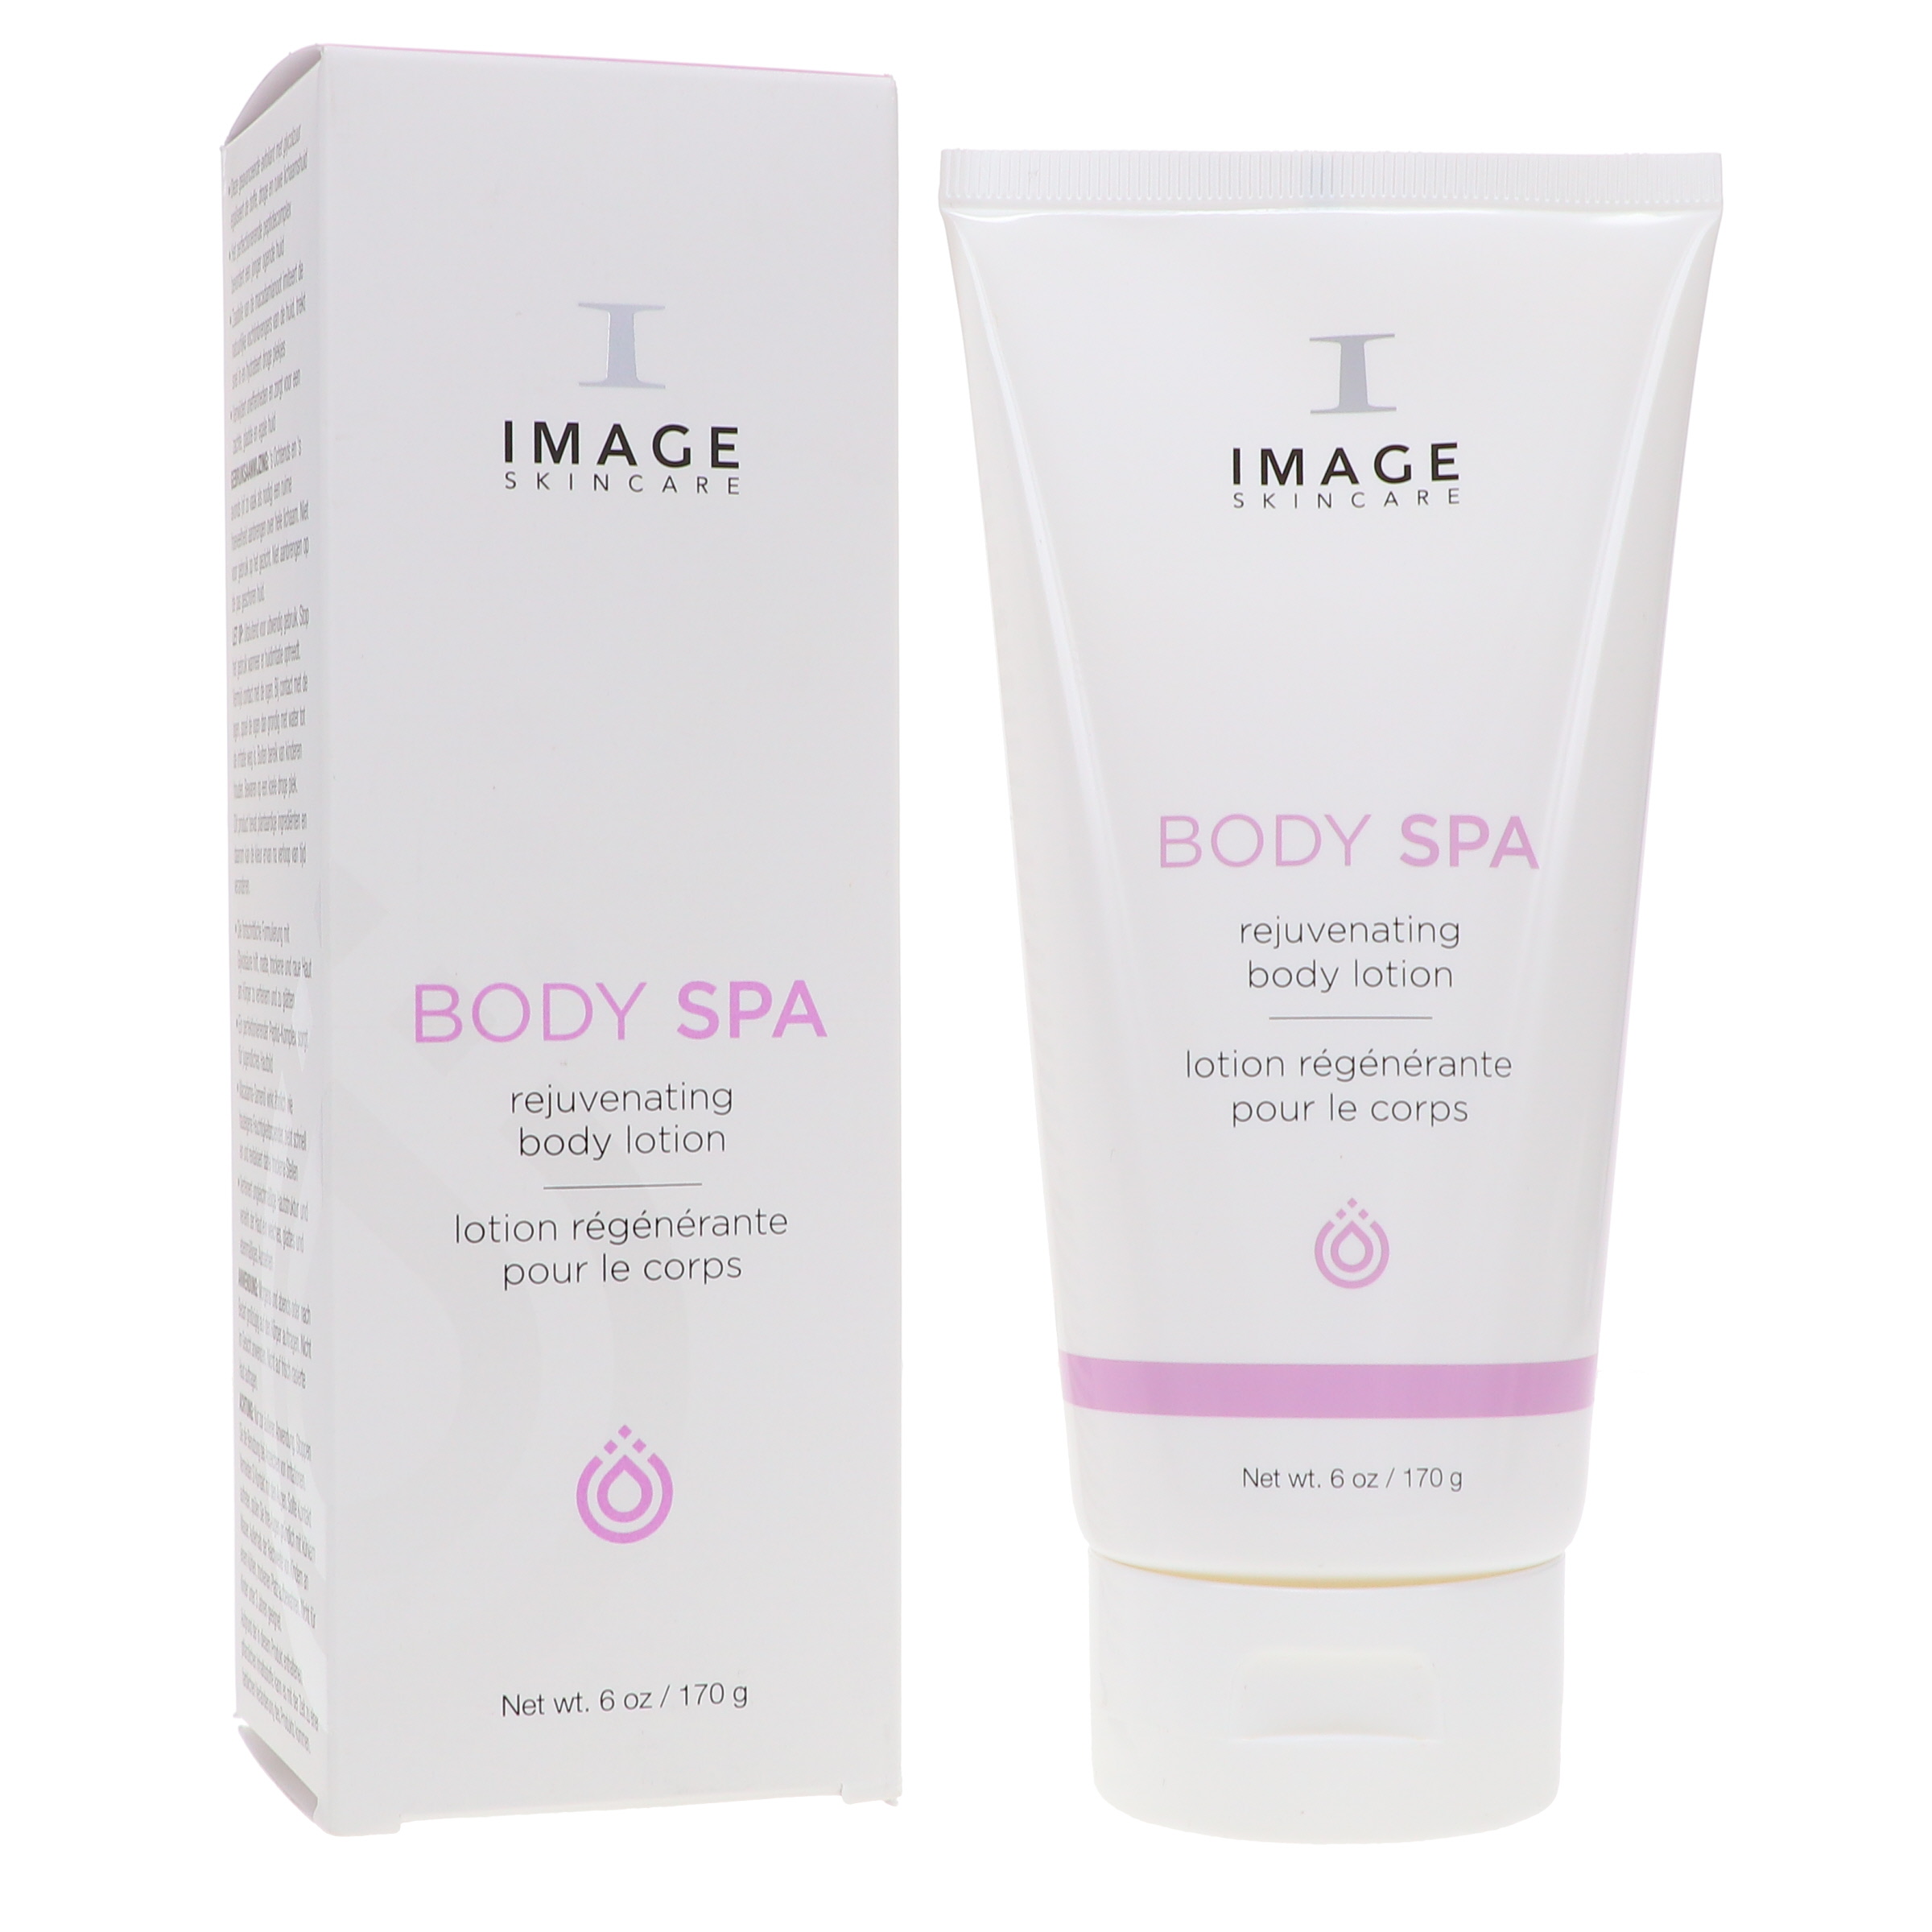 IMAGE Skincare BODY SPA Rejuvenating Body Lotion 6 oz - image 7 of 8